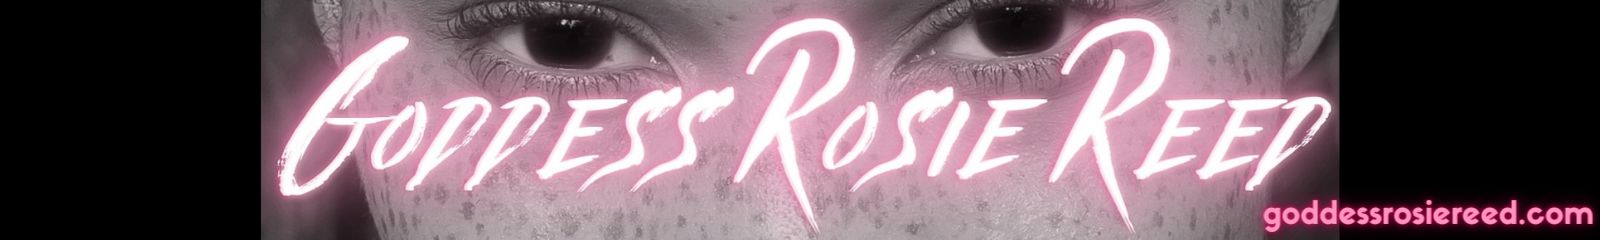 Goddess Rosie Reed